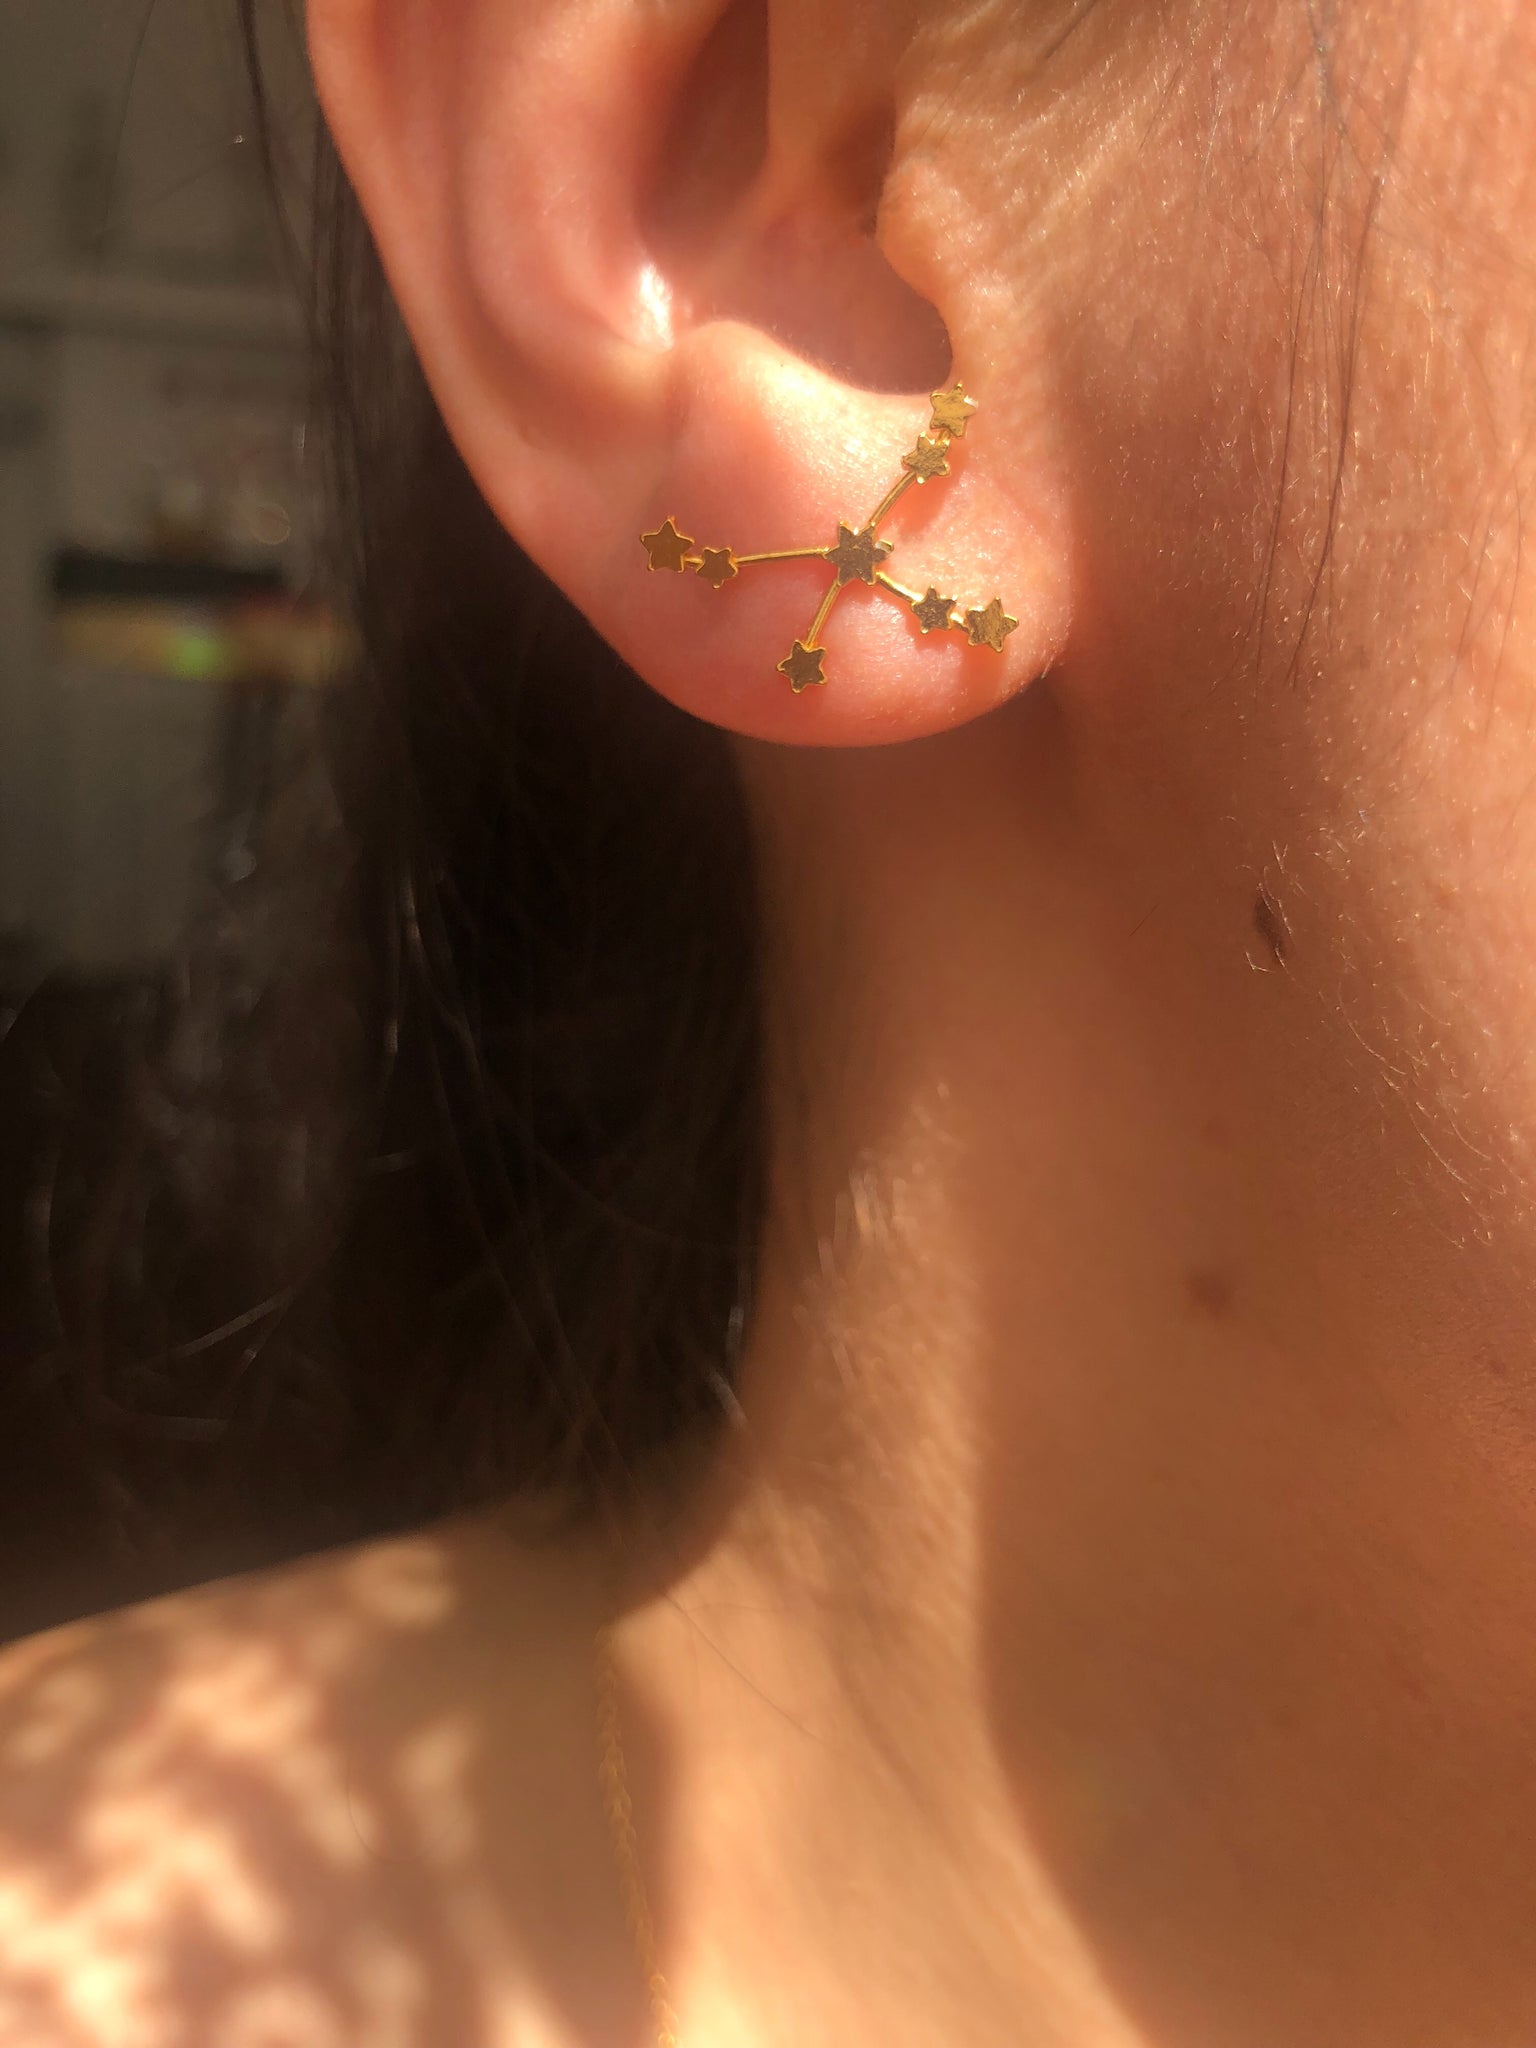 Aquila constellation earring (single)